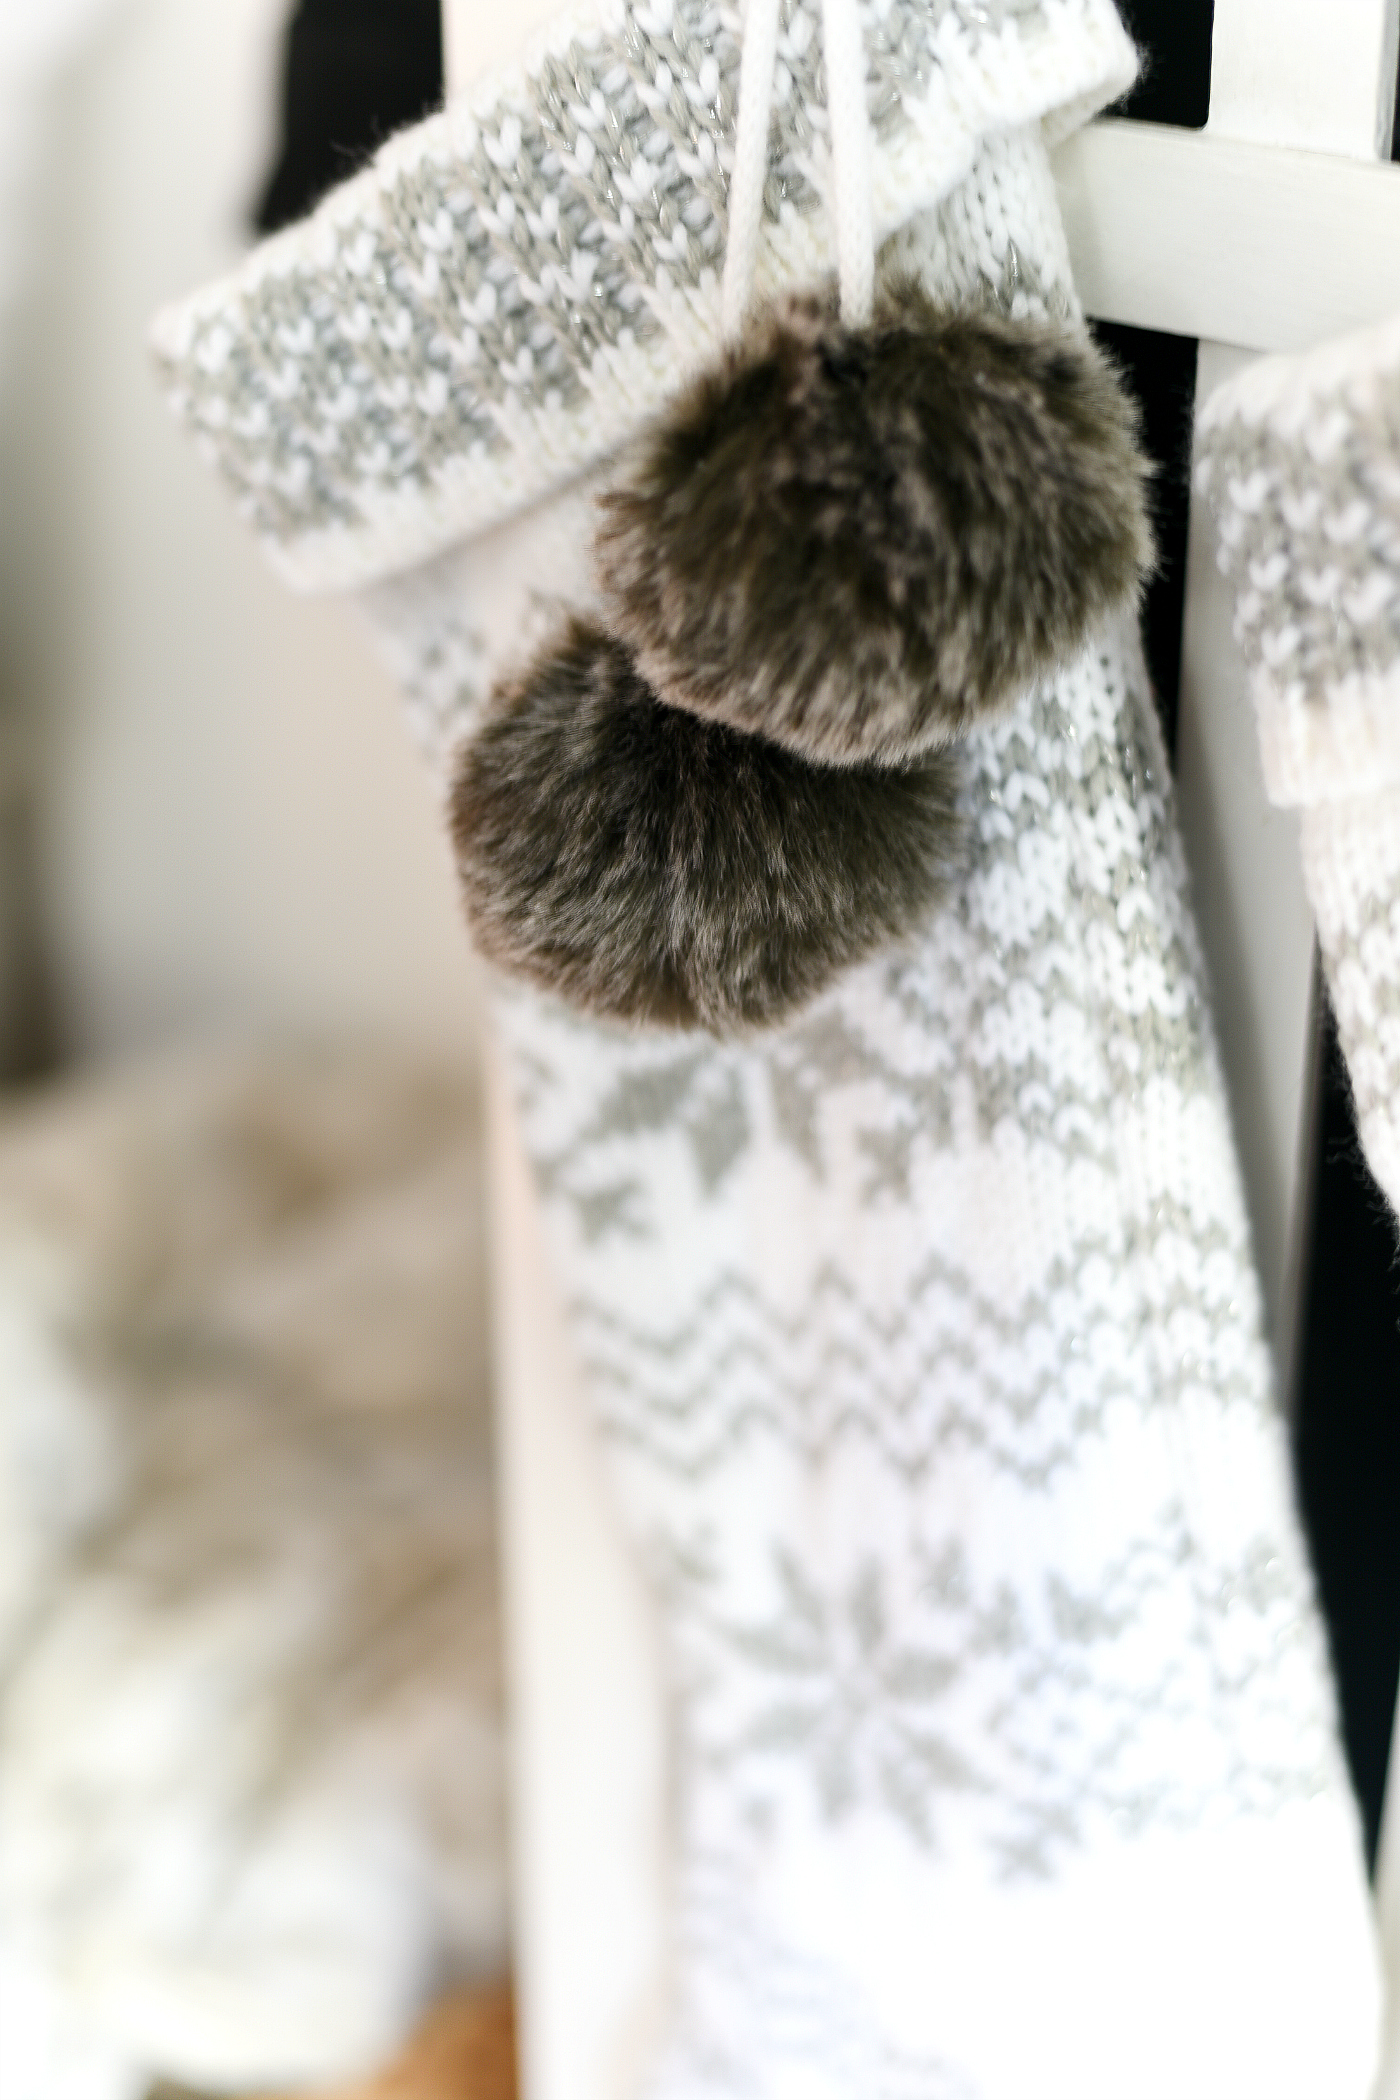 Knit Stockings - Sweater stockings - Target Knit Christmas Stockings - Gray and White Christmas Sweater stockings